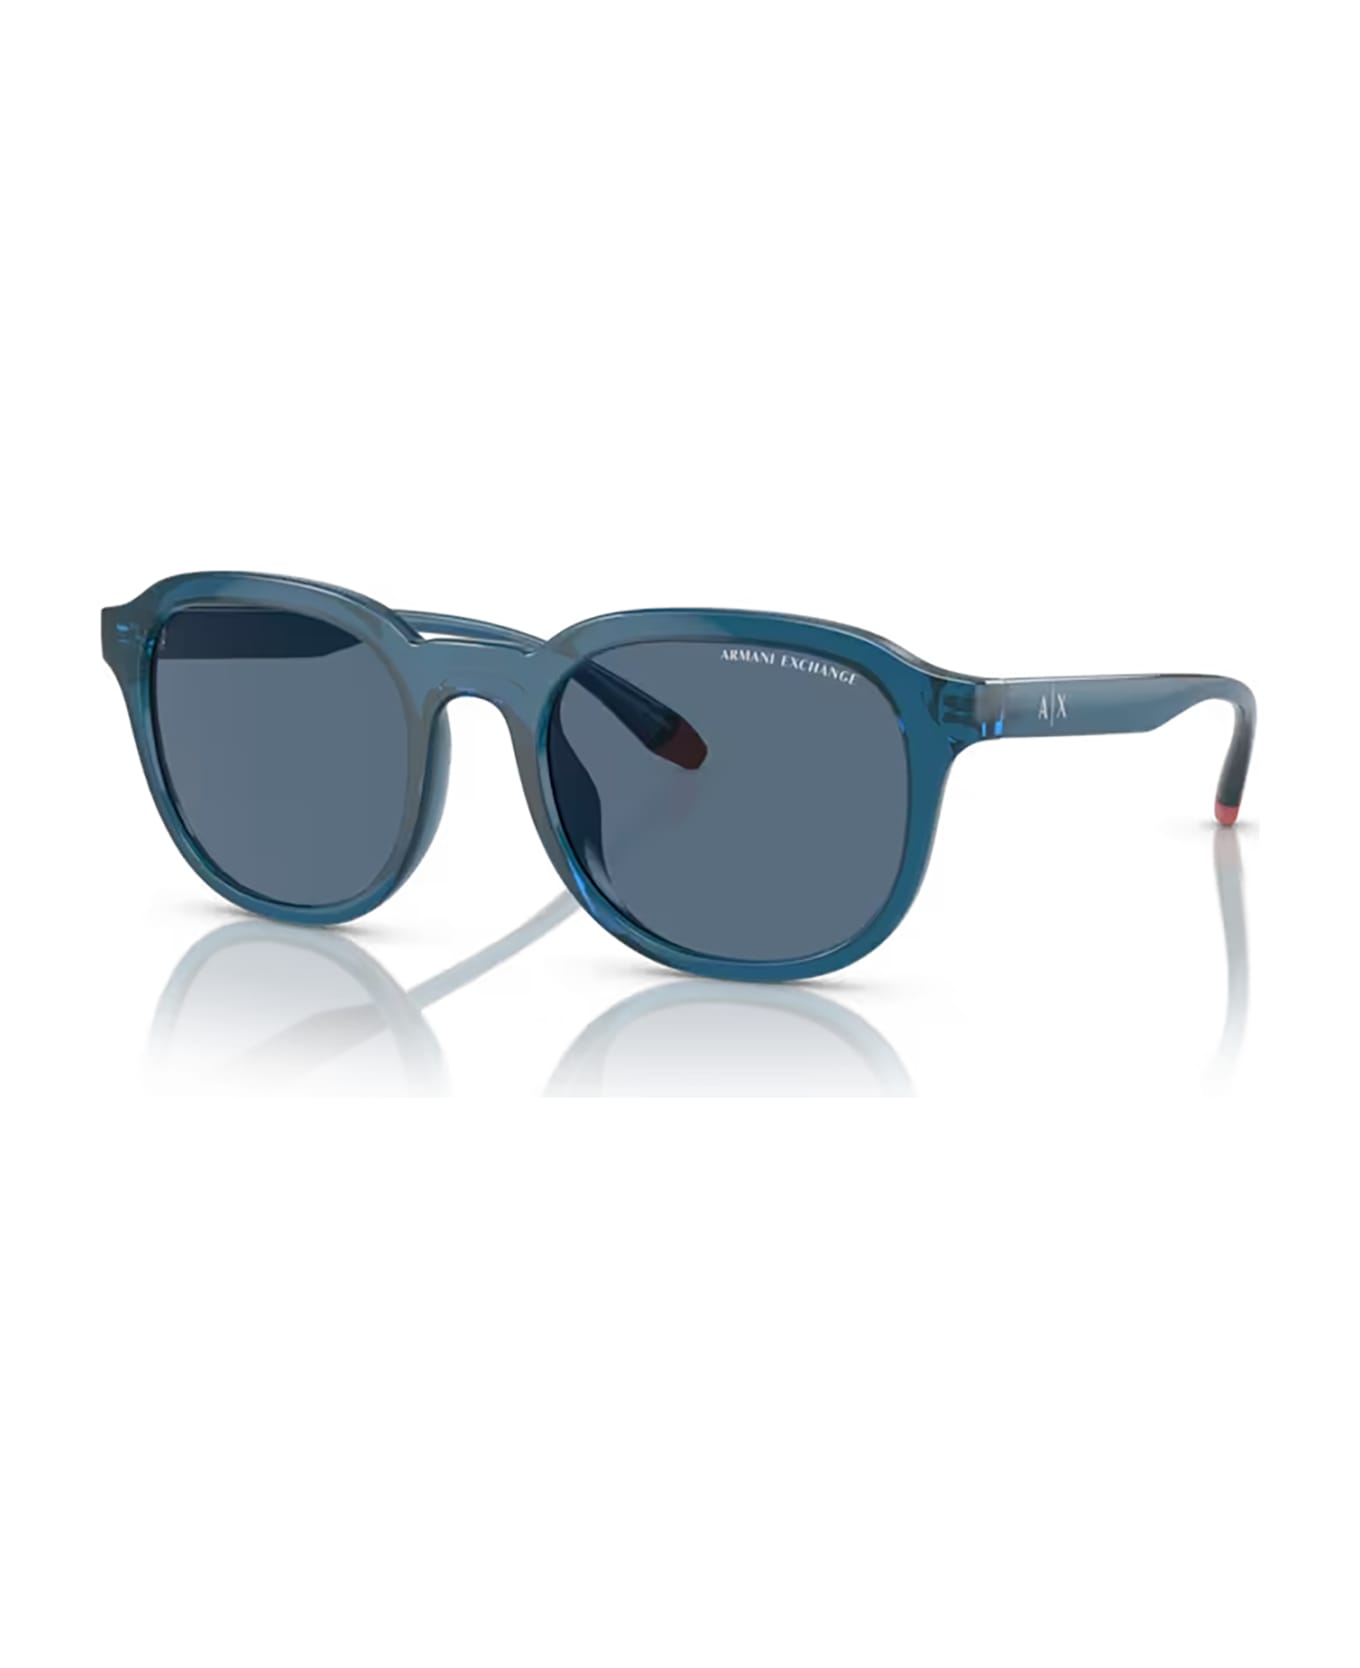 Armani Exchange Ax4129su Shiny Transparent Blue Sunglasses - Shiny Transparent Blue